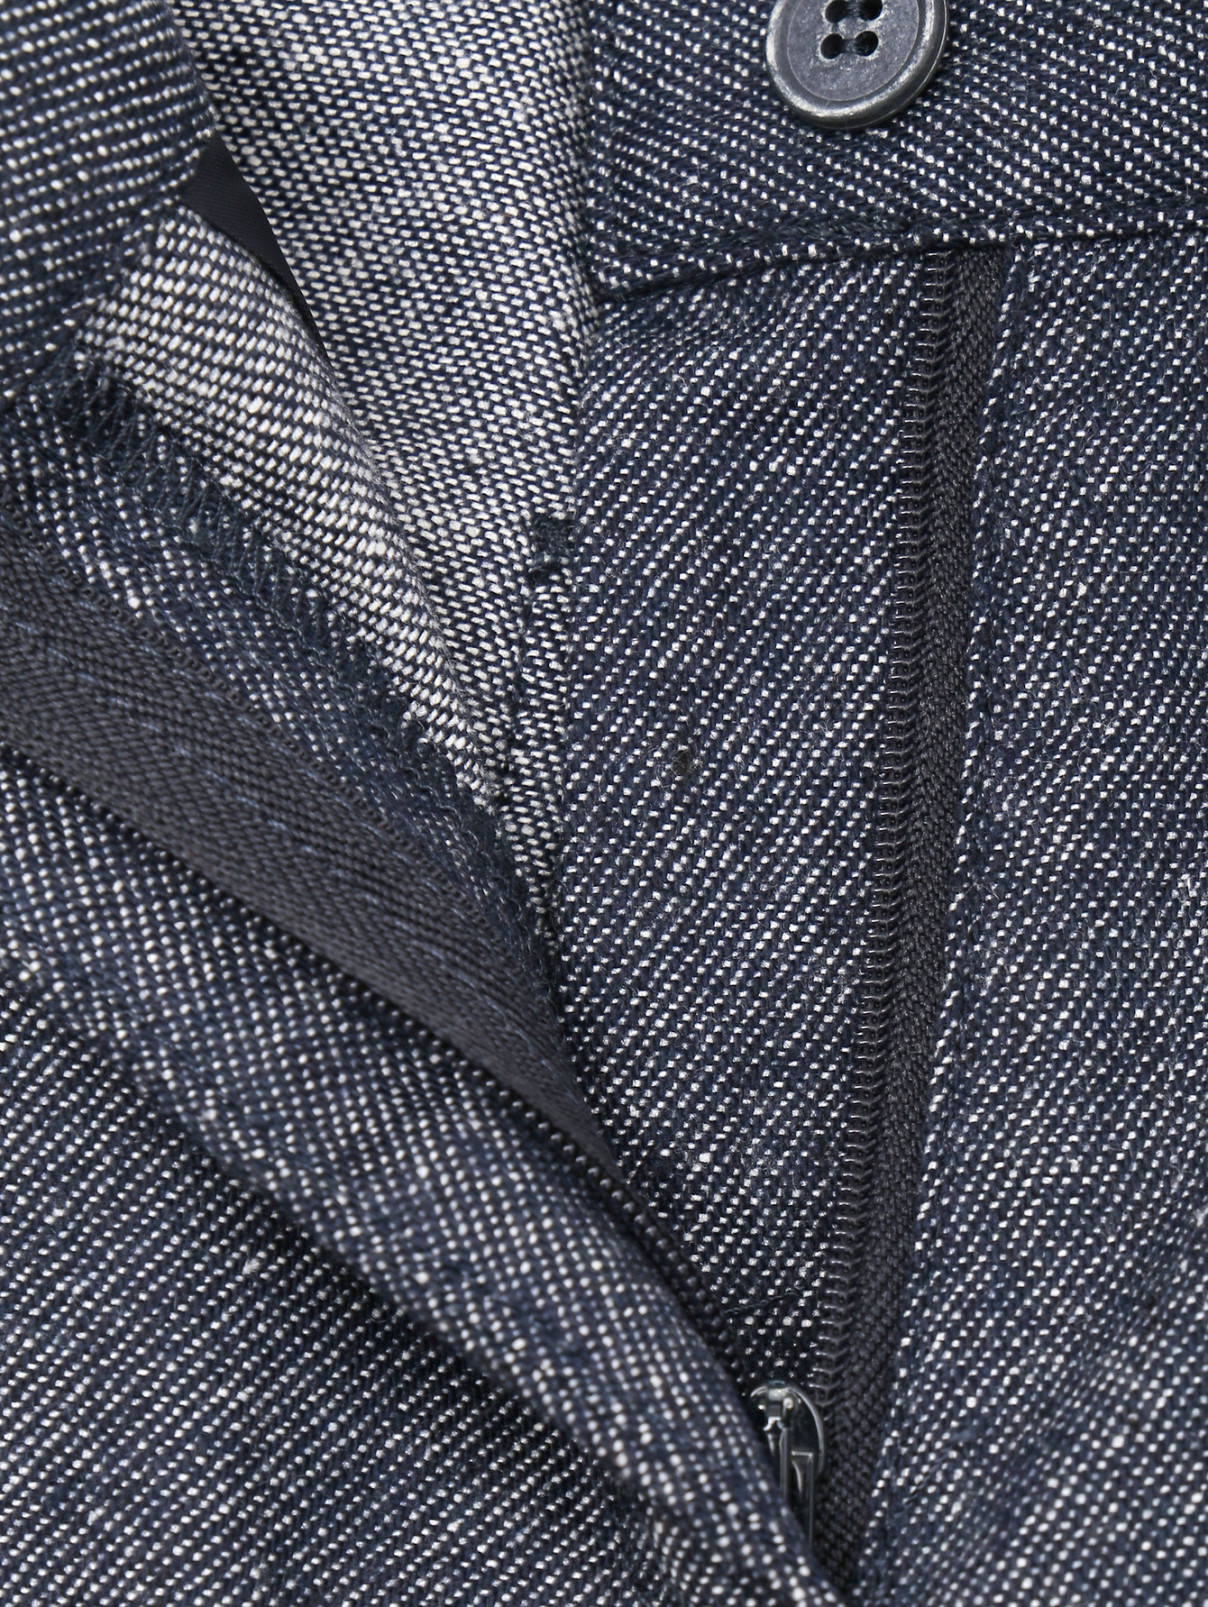 Широкие брюки со складками Aspesi  –  Деталь  – Цвет:  Синий